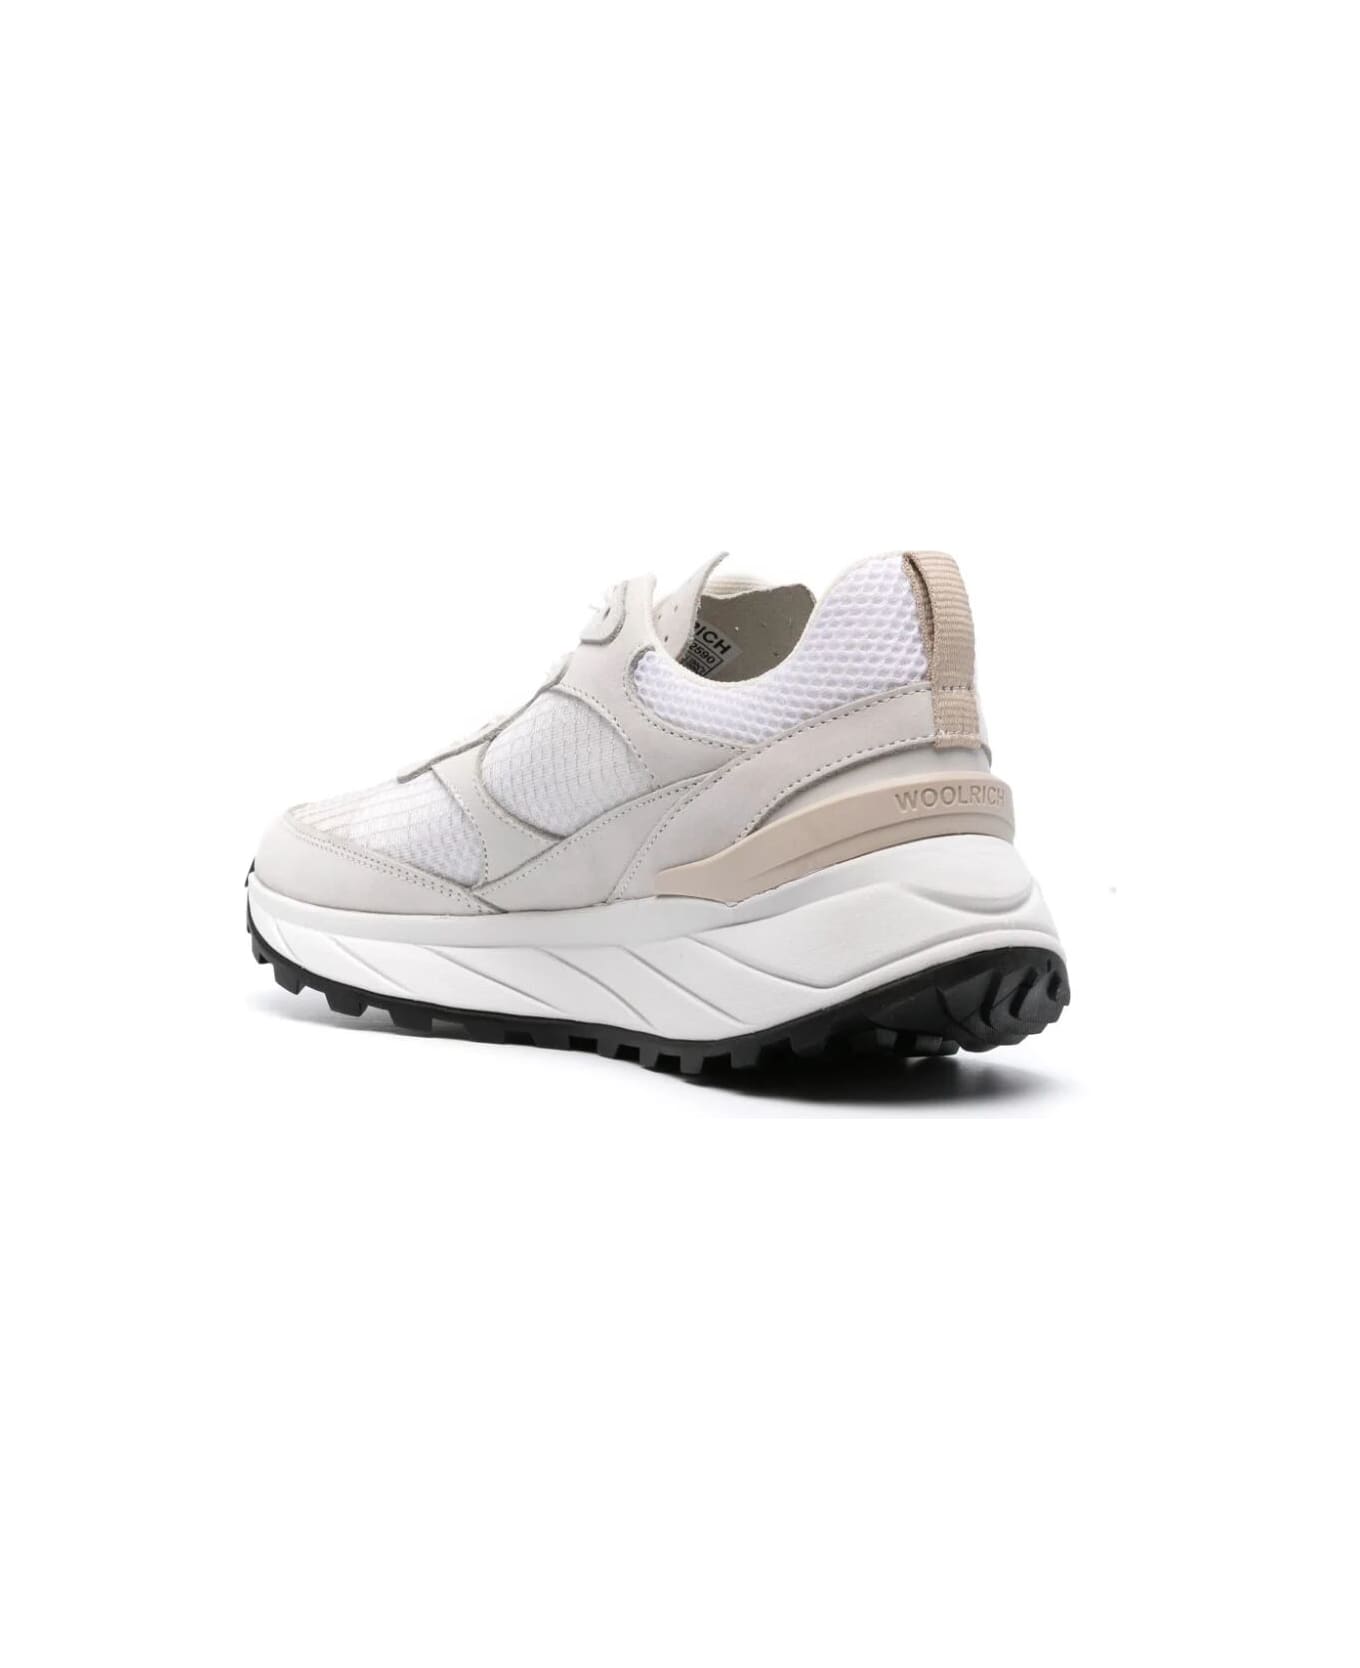 Woolrich Running Sneakers - White White スニーカー